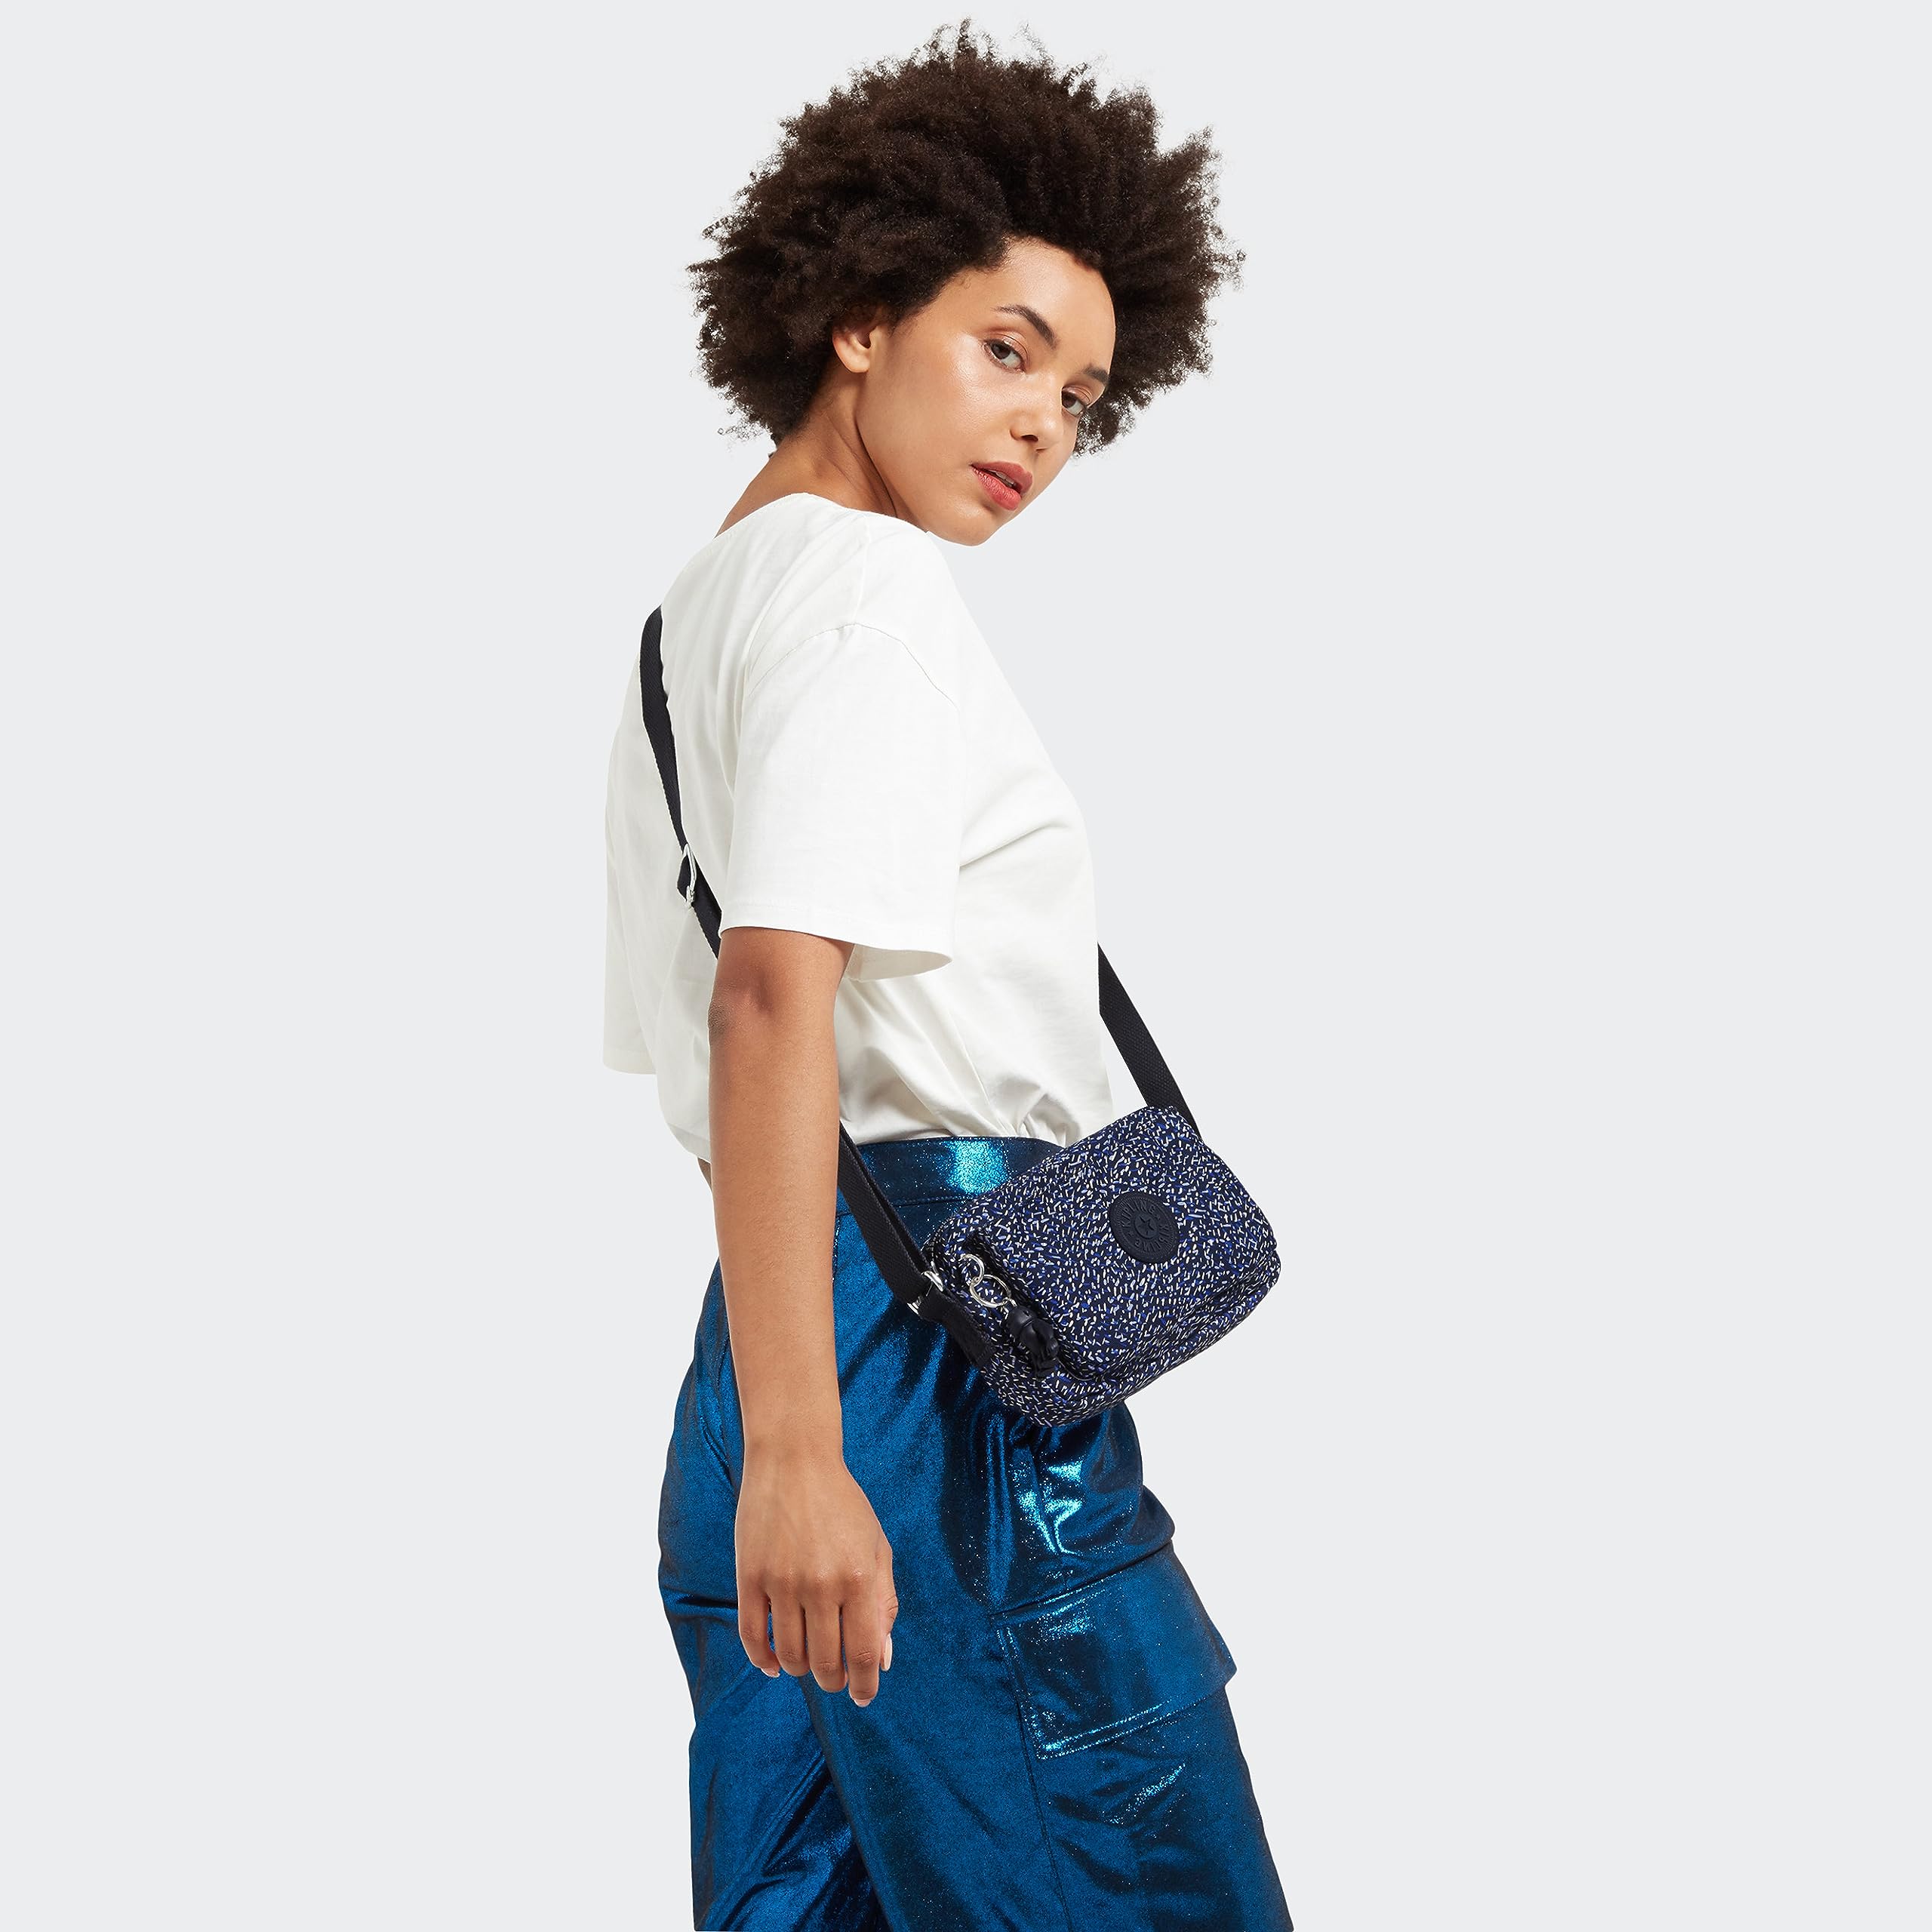 Kipling Women's Abanu Multi Crossbody Bag, Lightweight, Adjustable Nylon Waist Pack